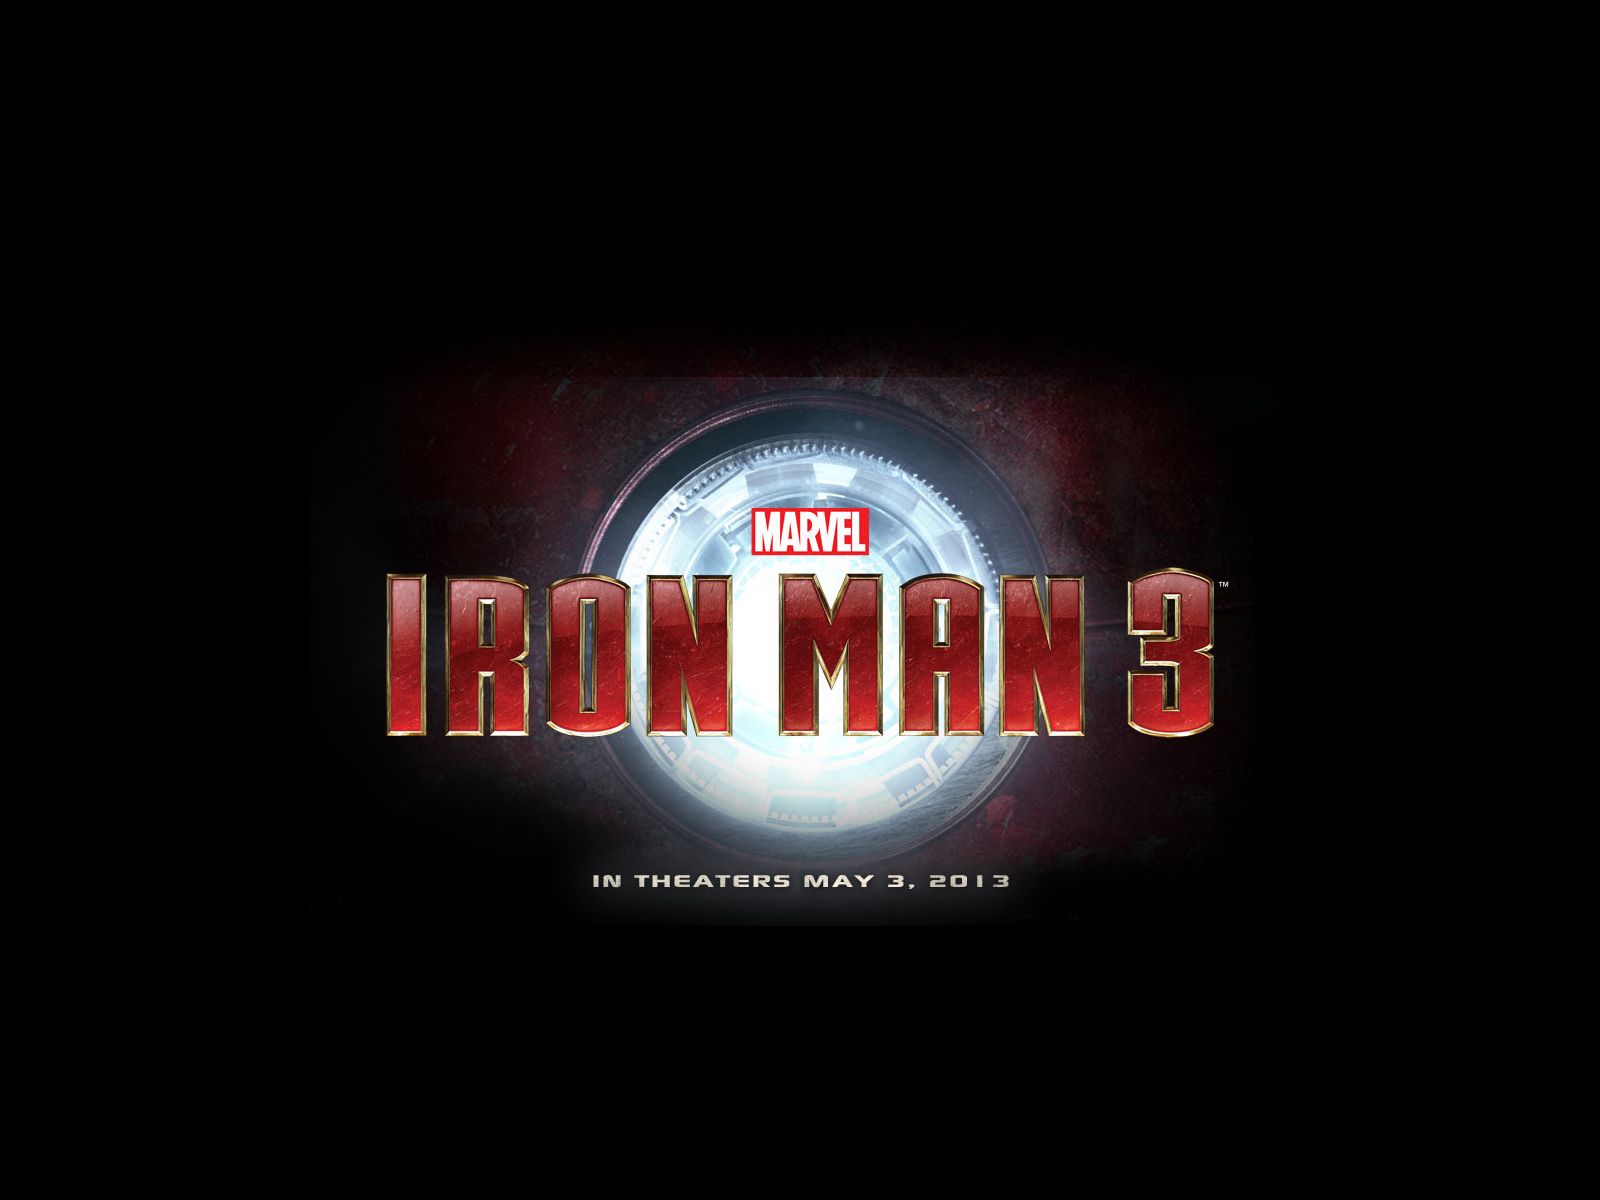 Iron Man 3 Poster wallpaper. Iron Man 3 Poster